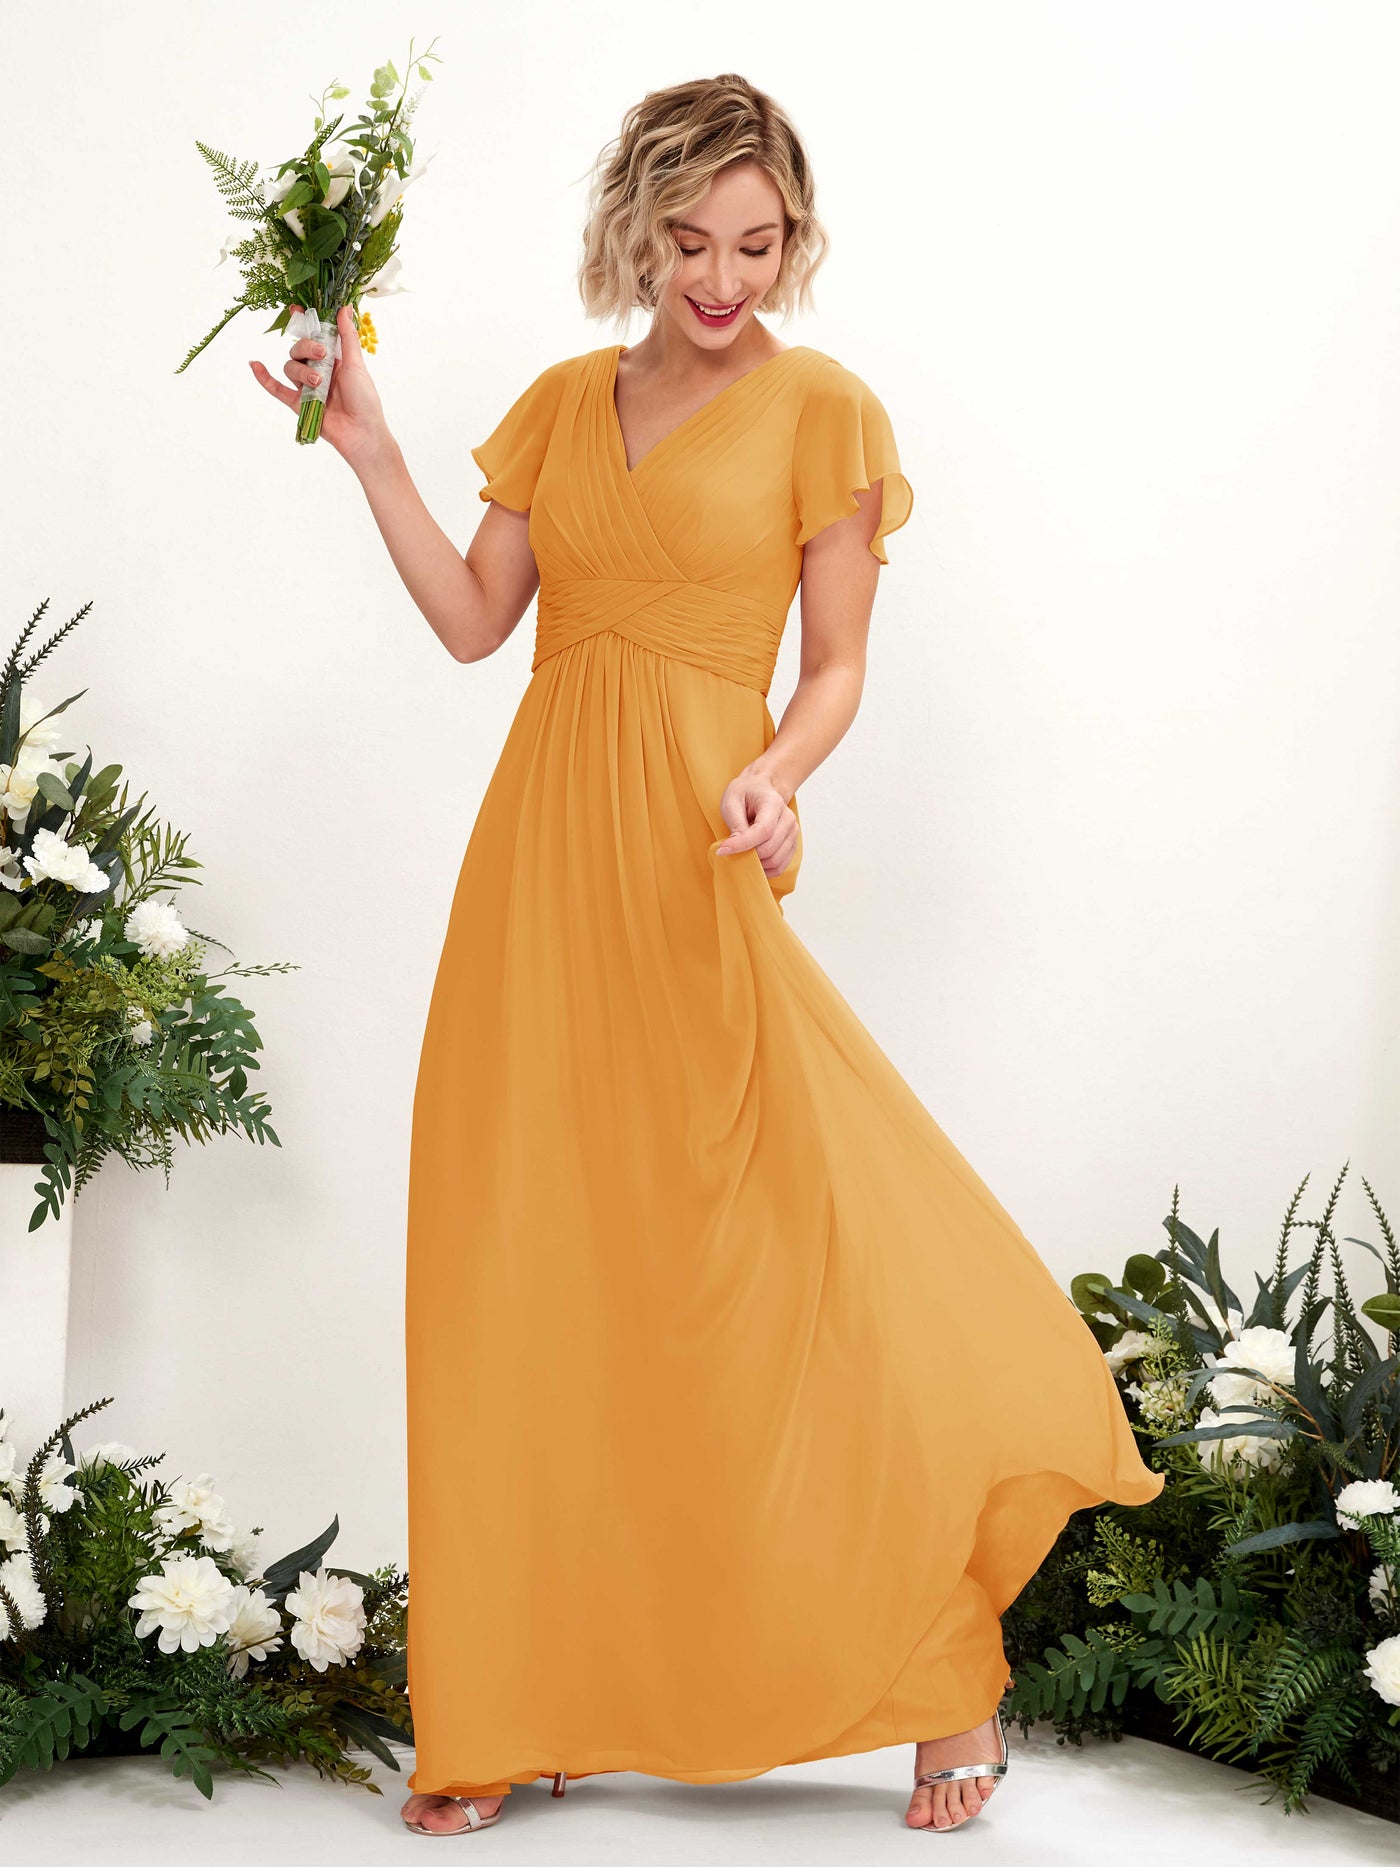 Mango Bridesmaid Dresses Bridesmaid Dress A-line Chiffon V-neck Full Length Short Sleeves Wedding Party Dress (81224302)#color_mango